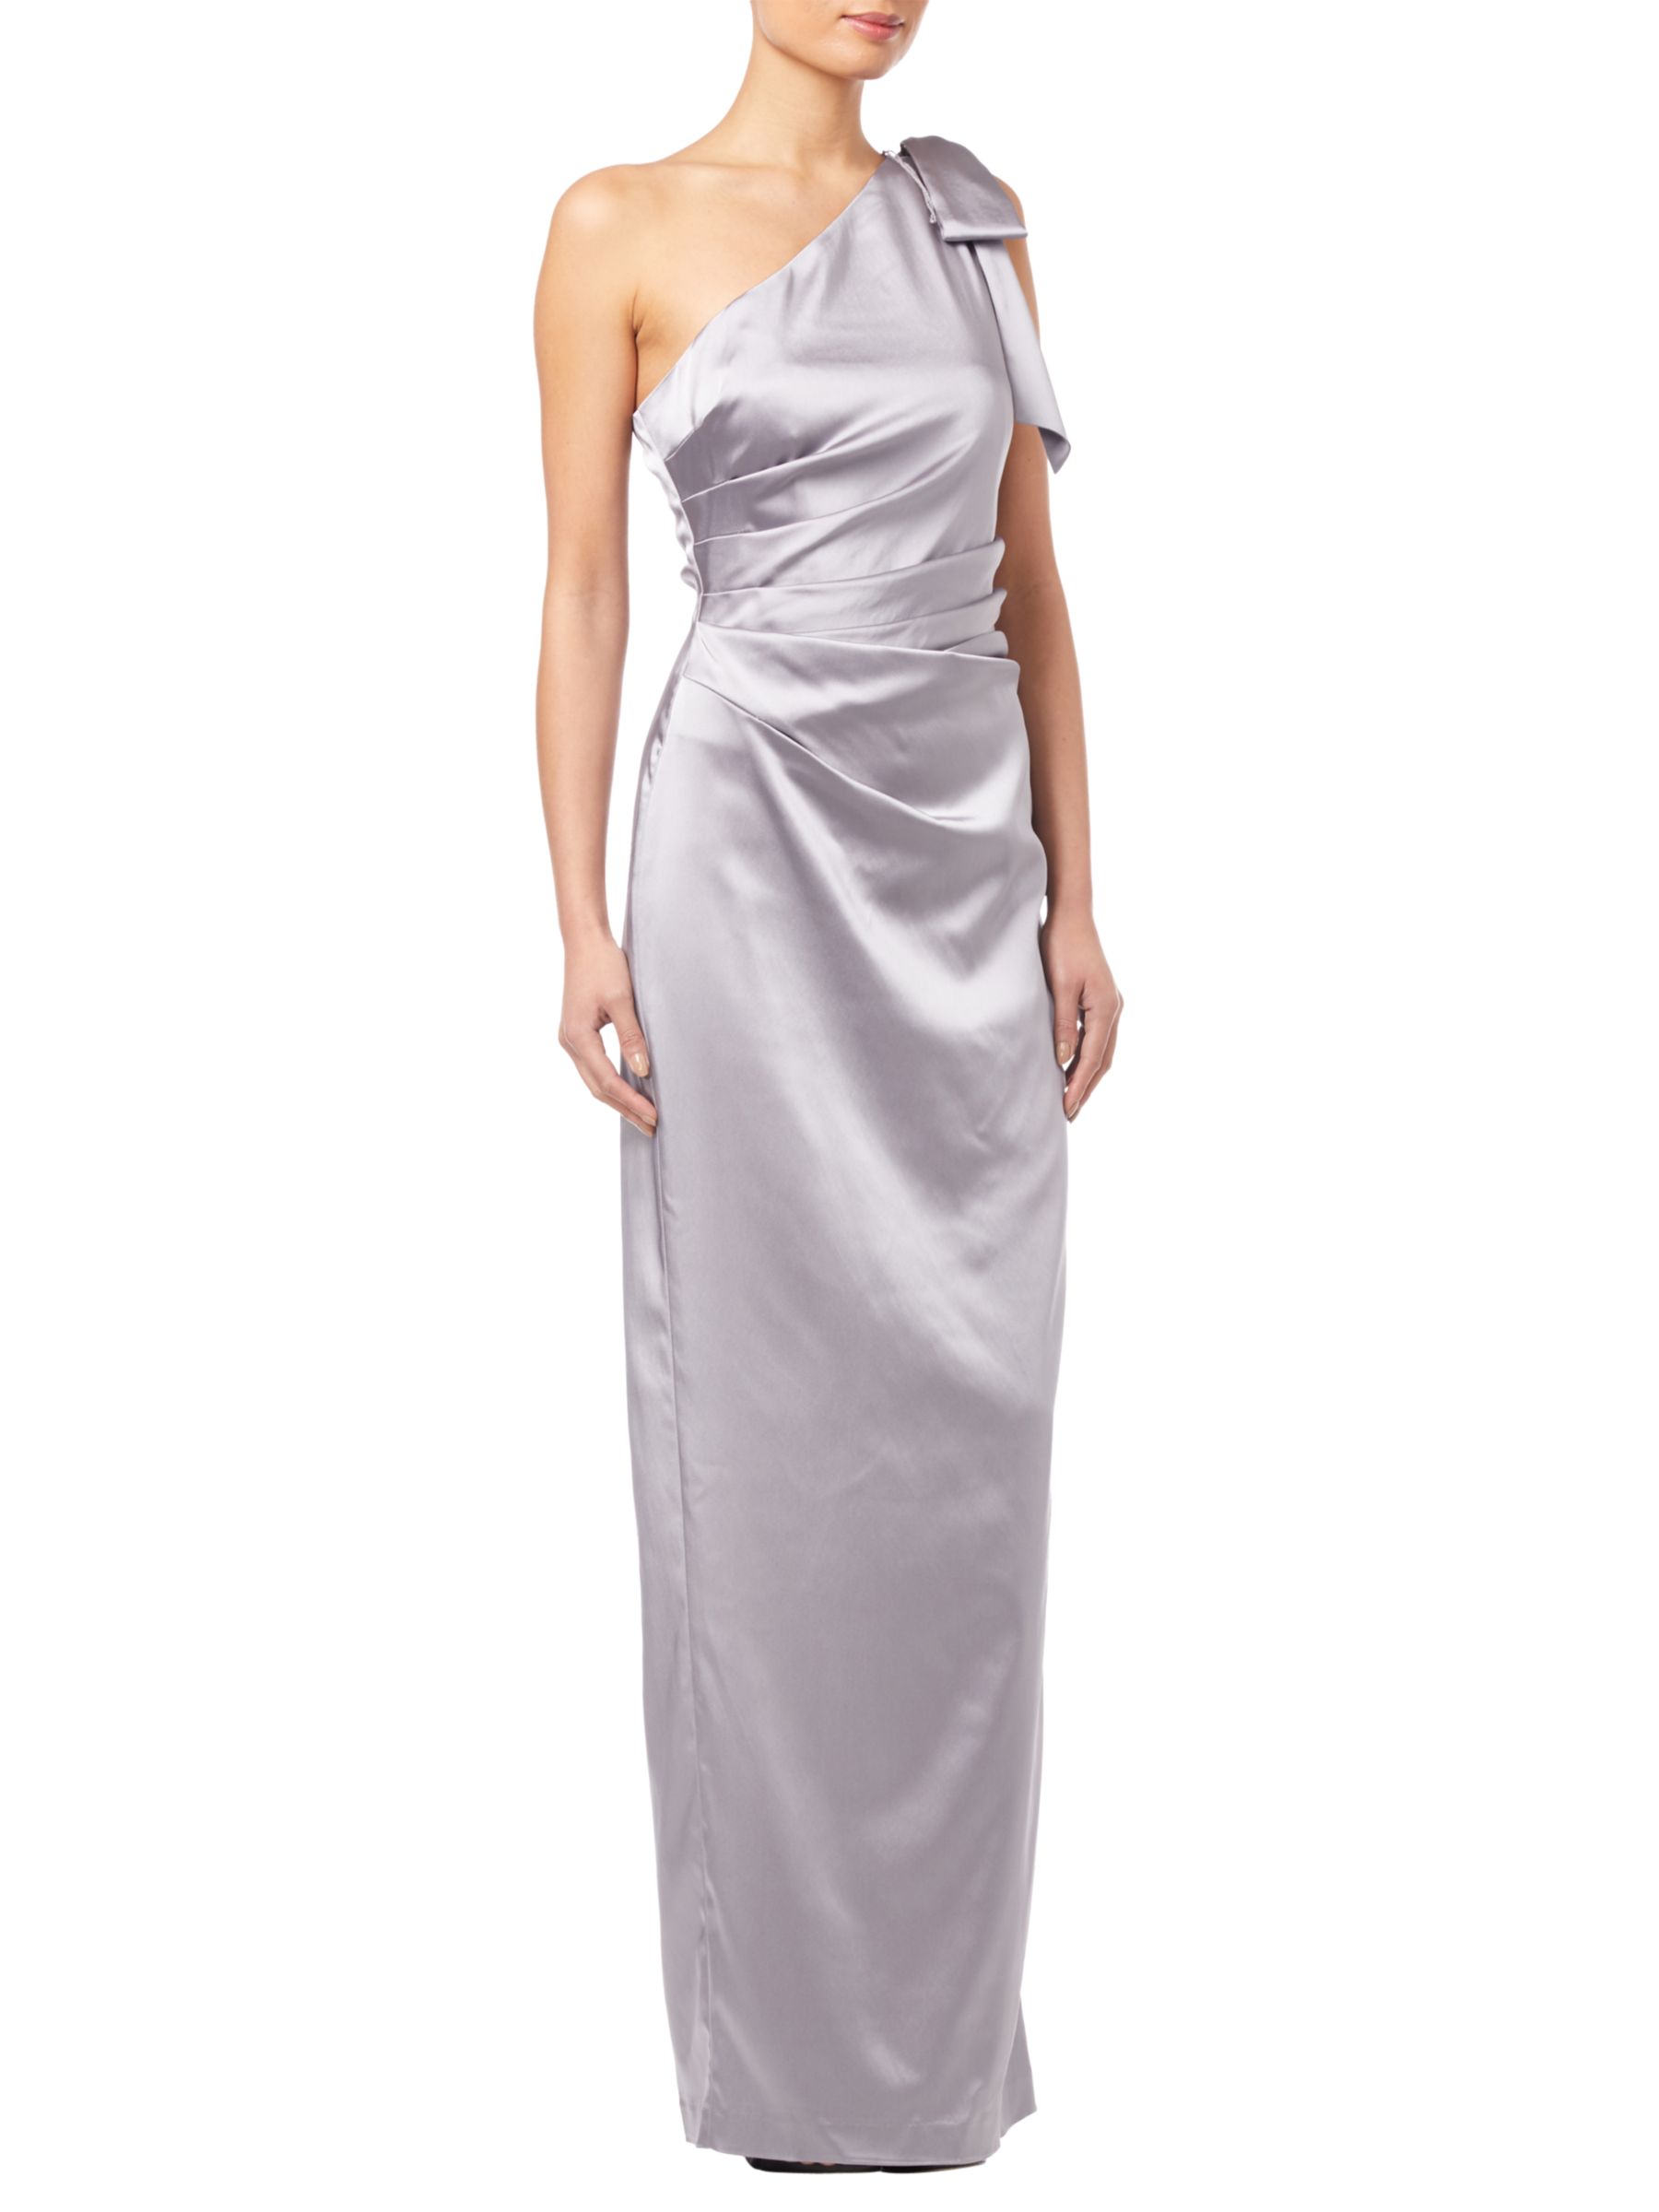 Adrianna Papell Satin Long Dress, Silver